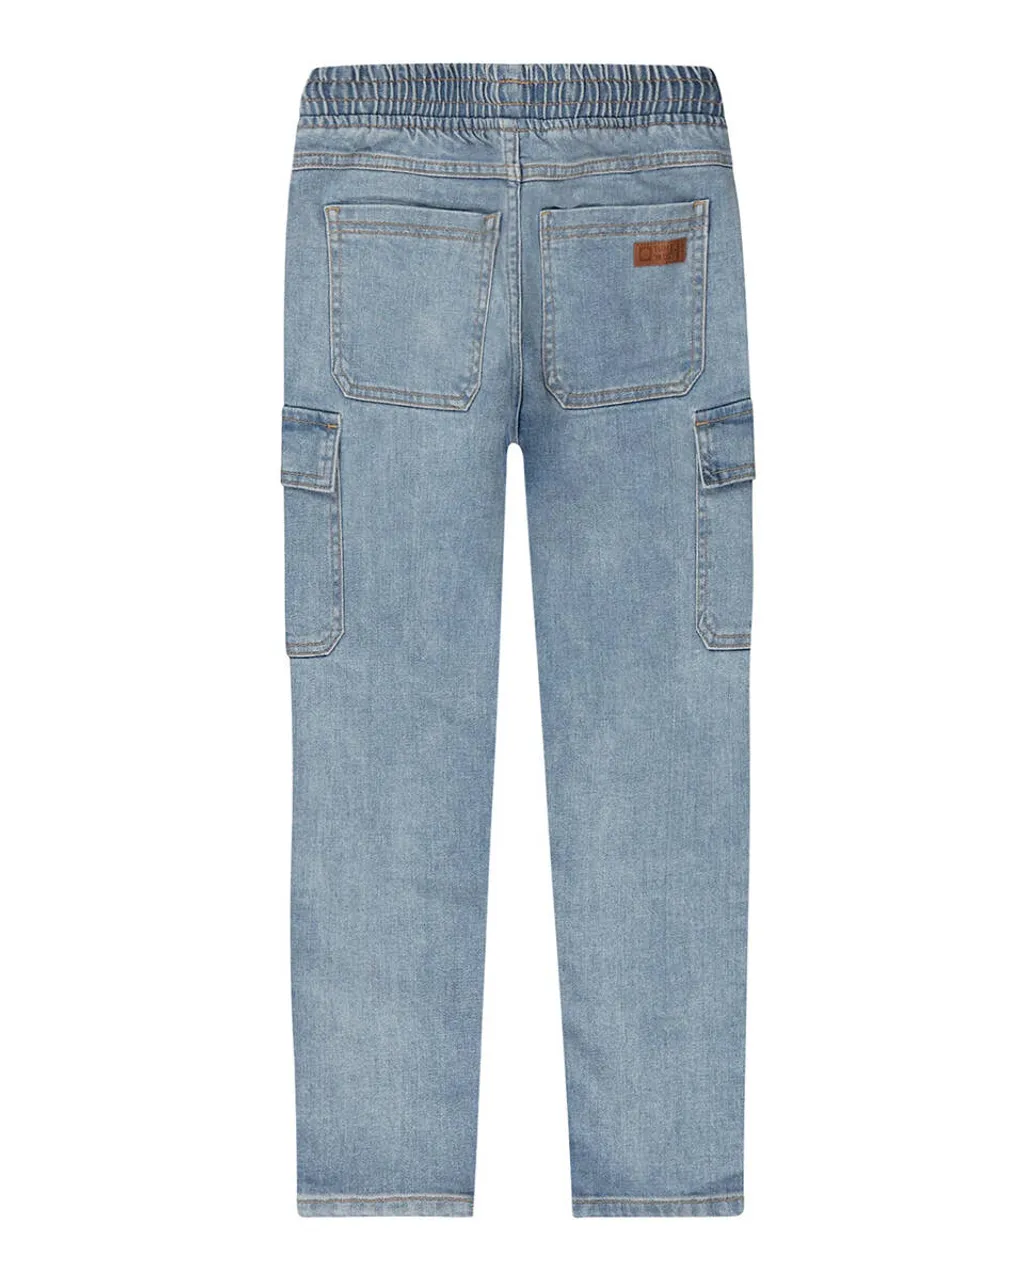 Tumble 'n Dry Jeans 21520 jake cargo